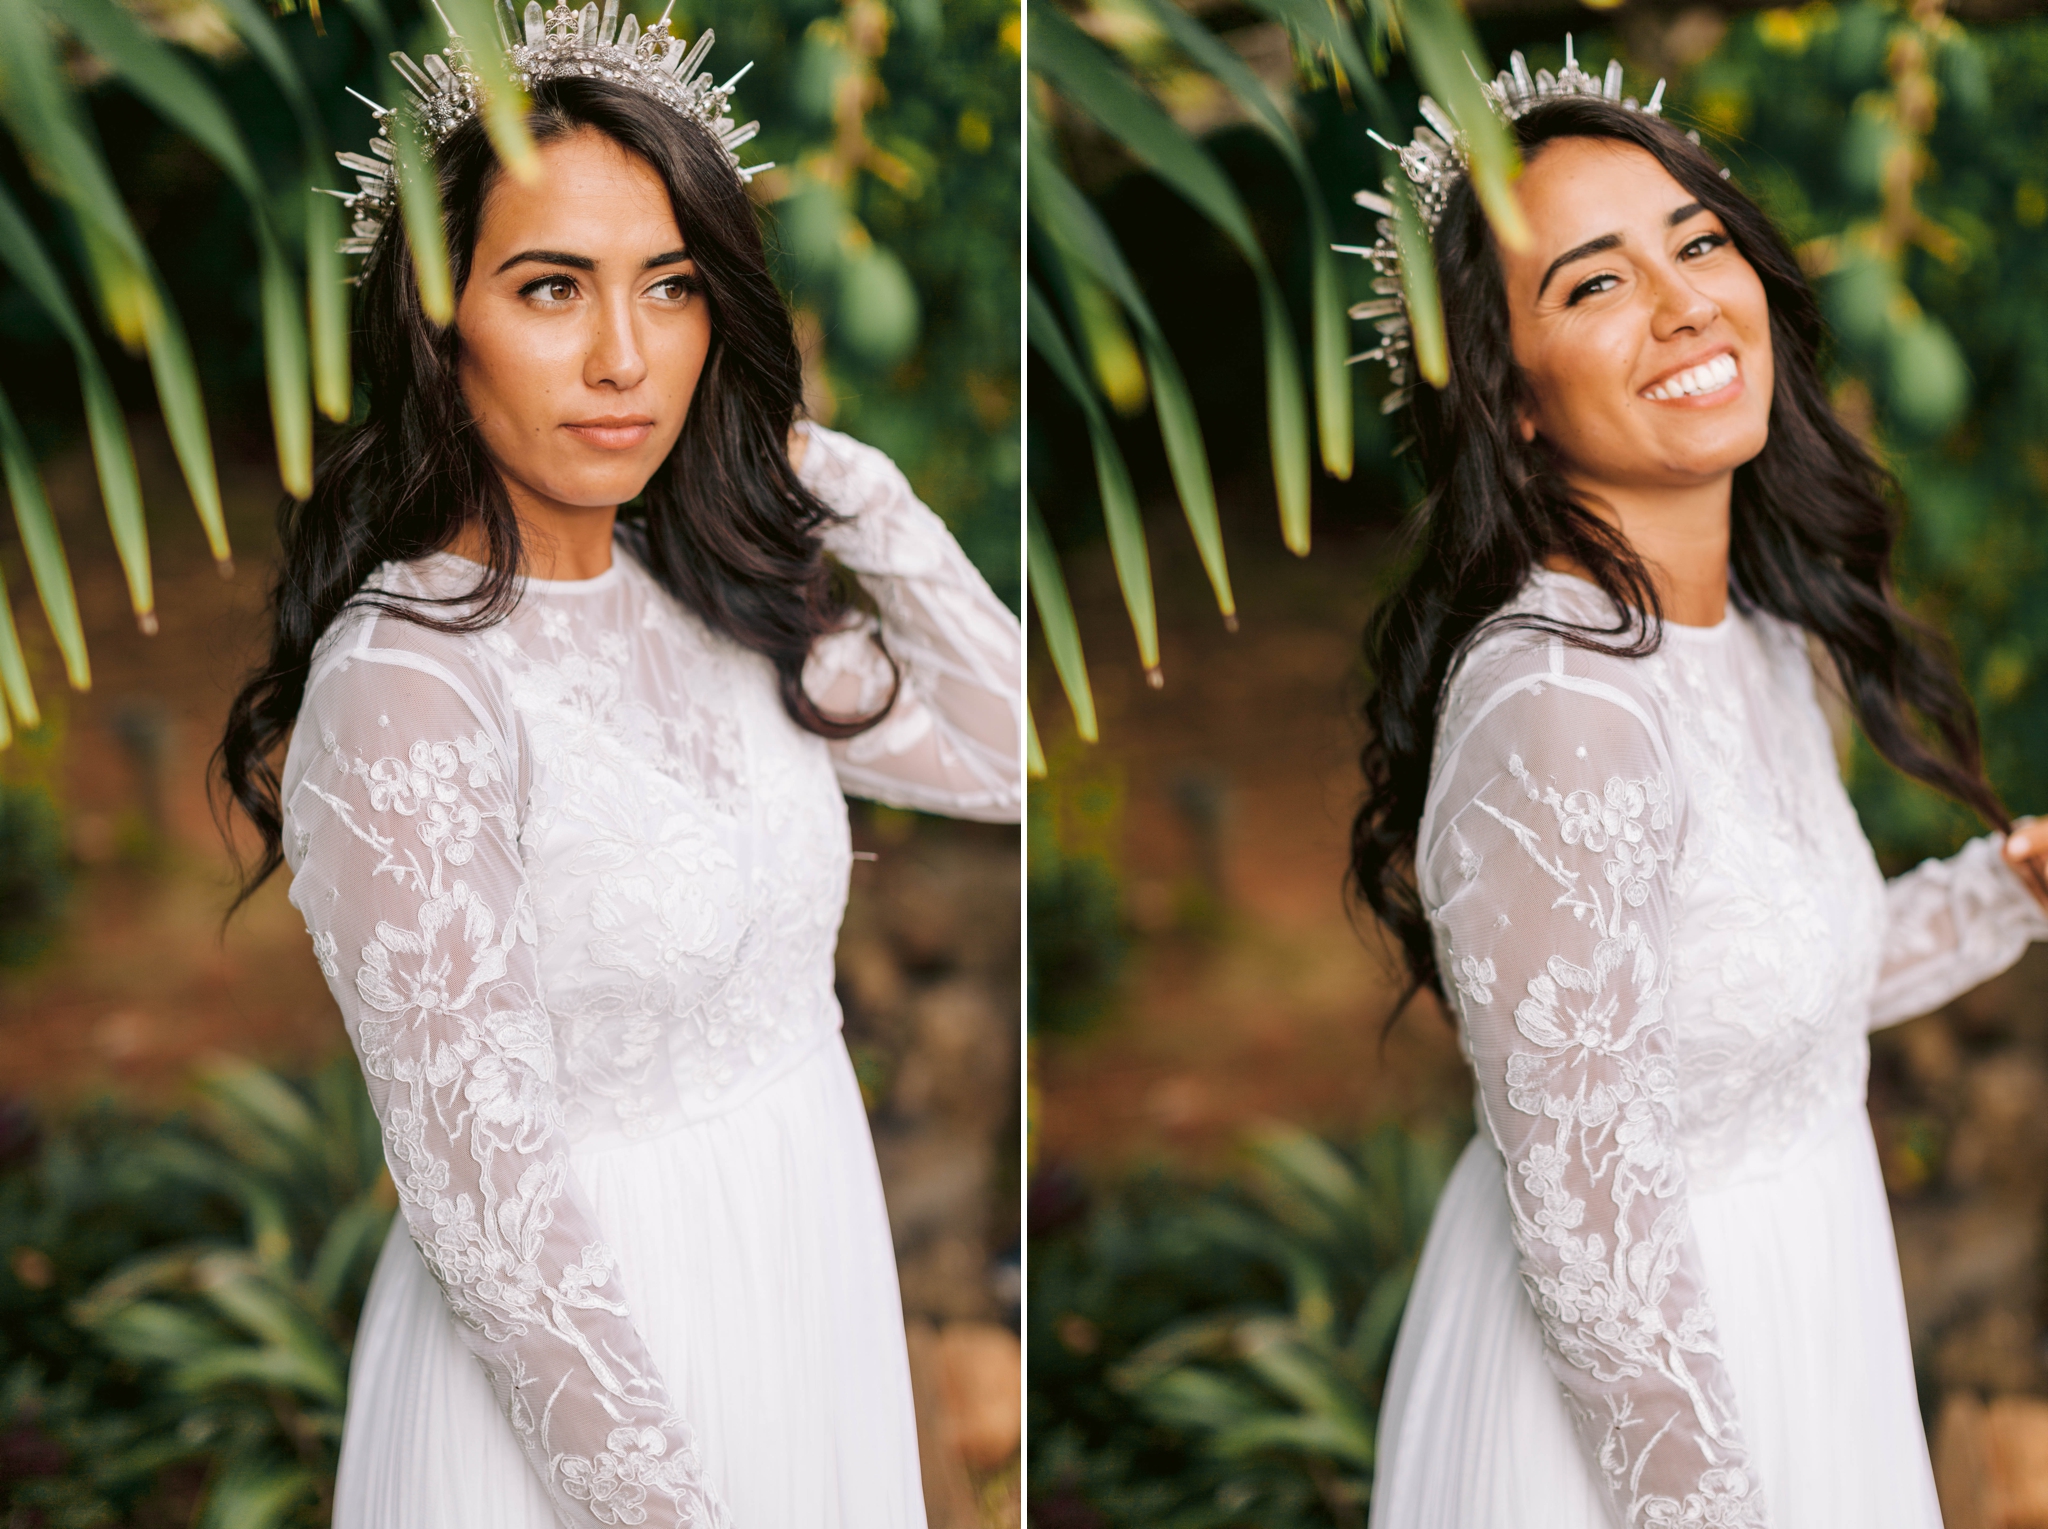  Hawaiian Bridal Portraits - Bride is wearing a wedding dress by asos and a unique crown under palm trees - Ana + Elijah - Wedding at Loulu Palm in Haleiwa, HI - Oahu Hawaii Wedding Photographer 